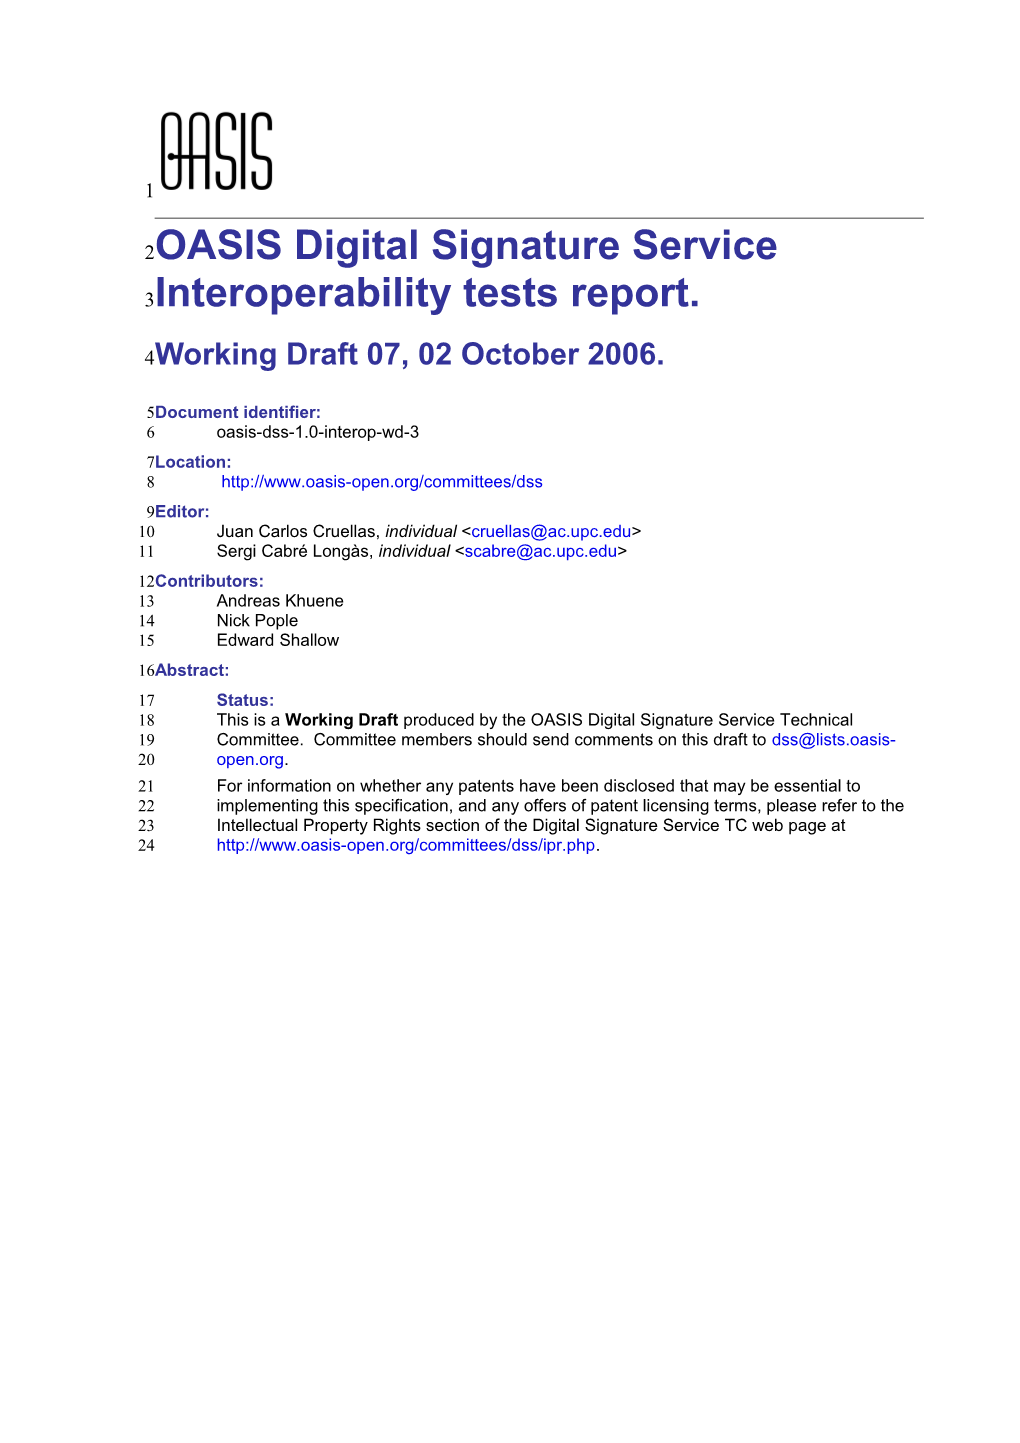 OASIS Digital Signature Service Interoperability Testsreport